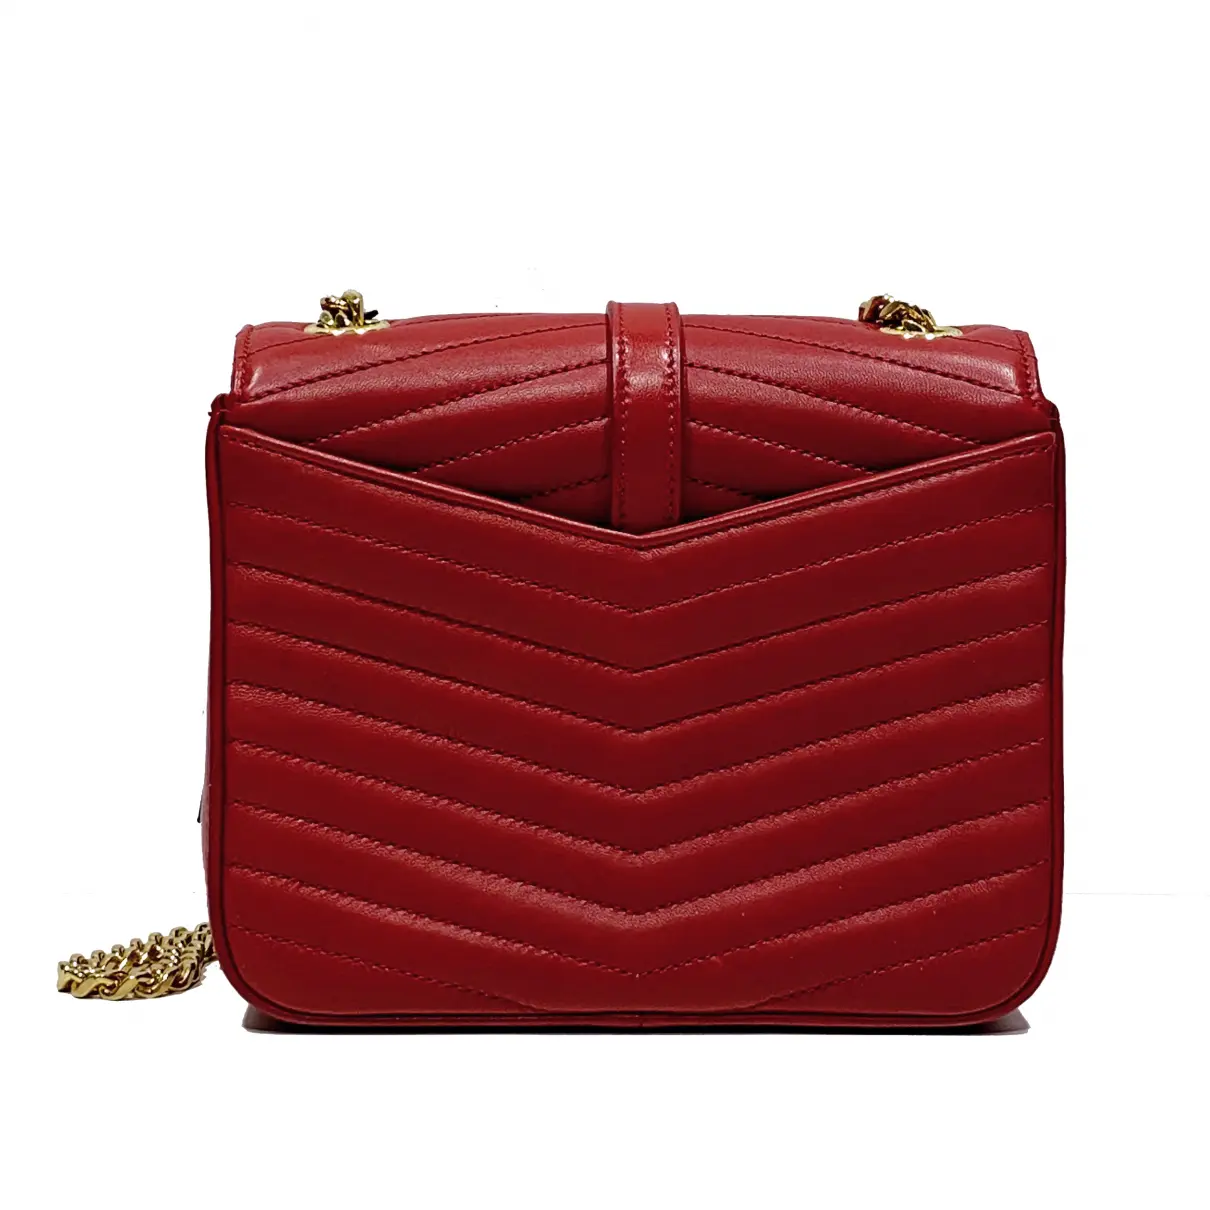 Buy Saint Laurent Sulpice leather handbag online